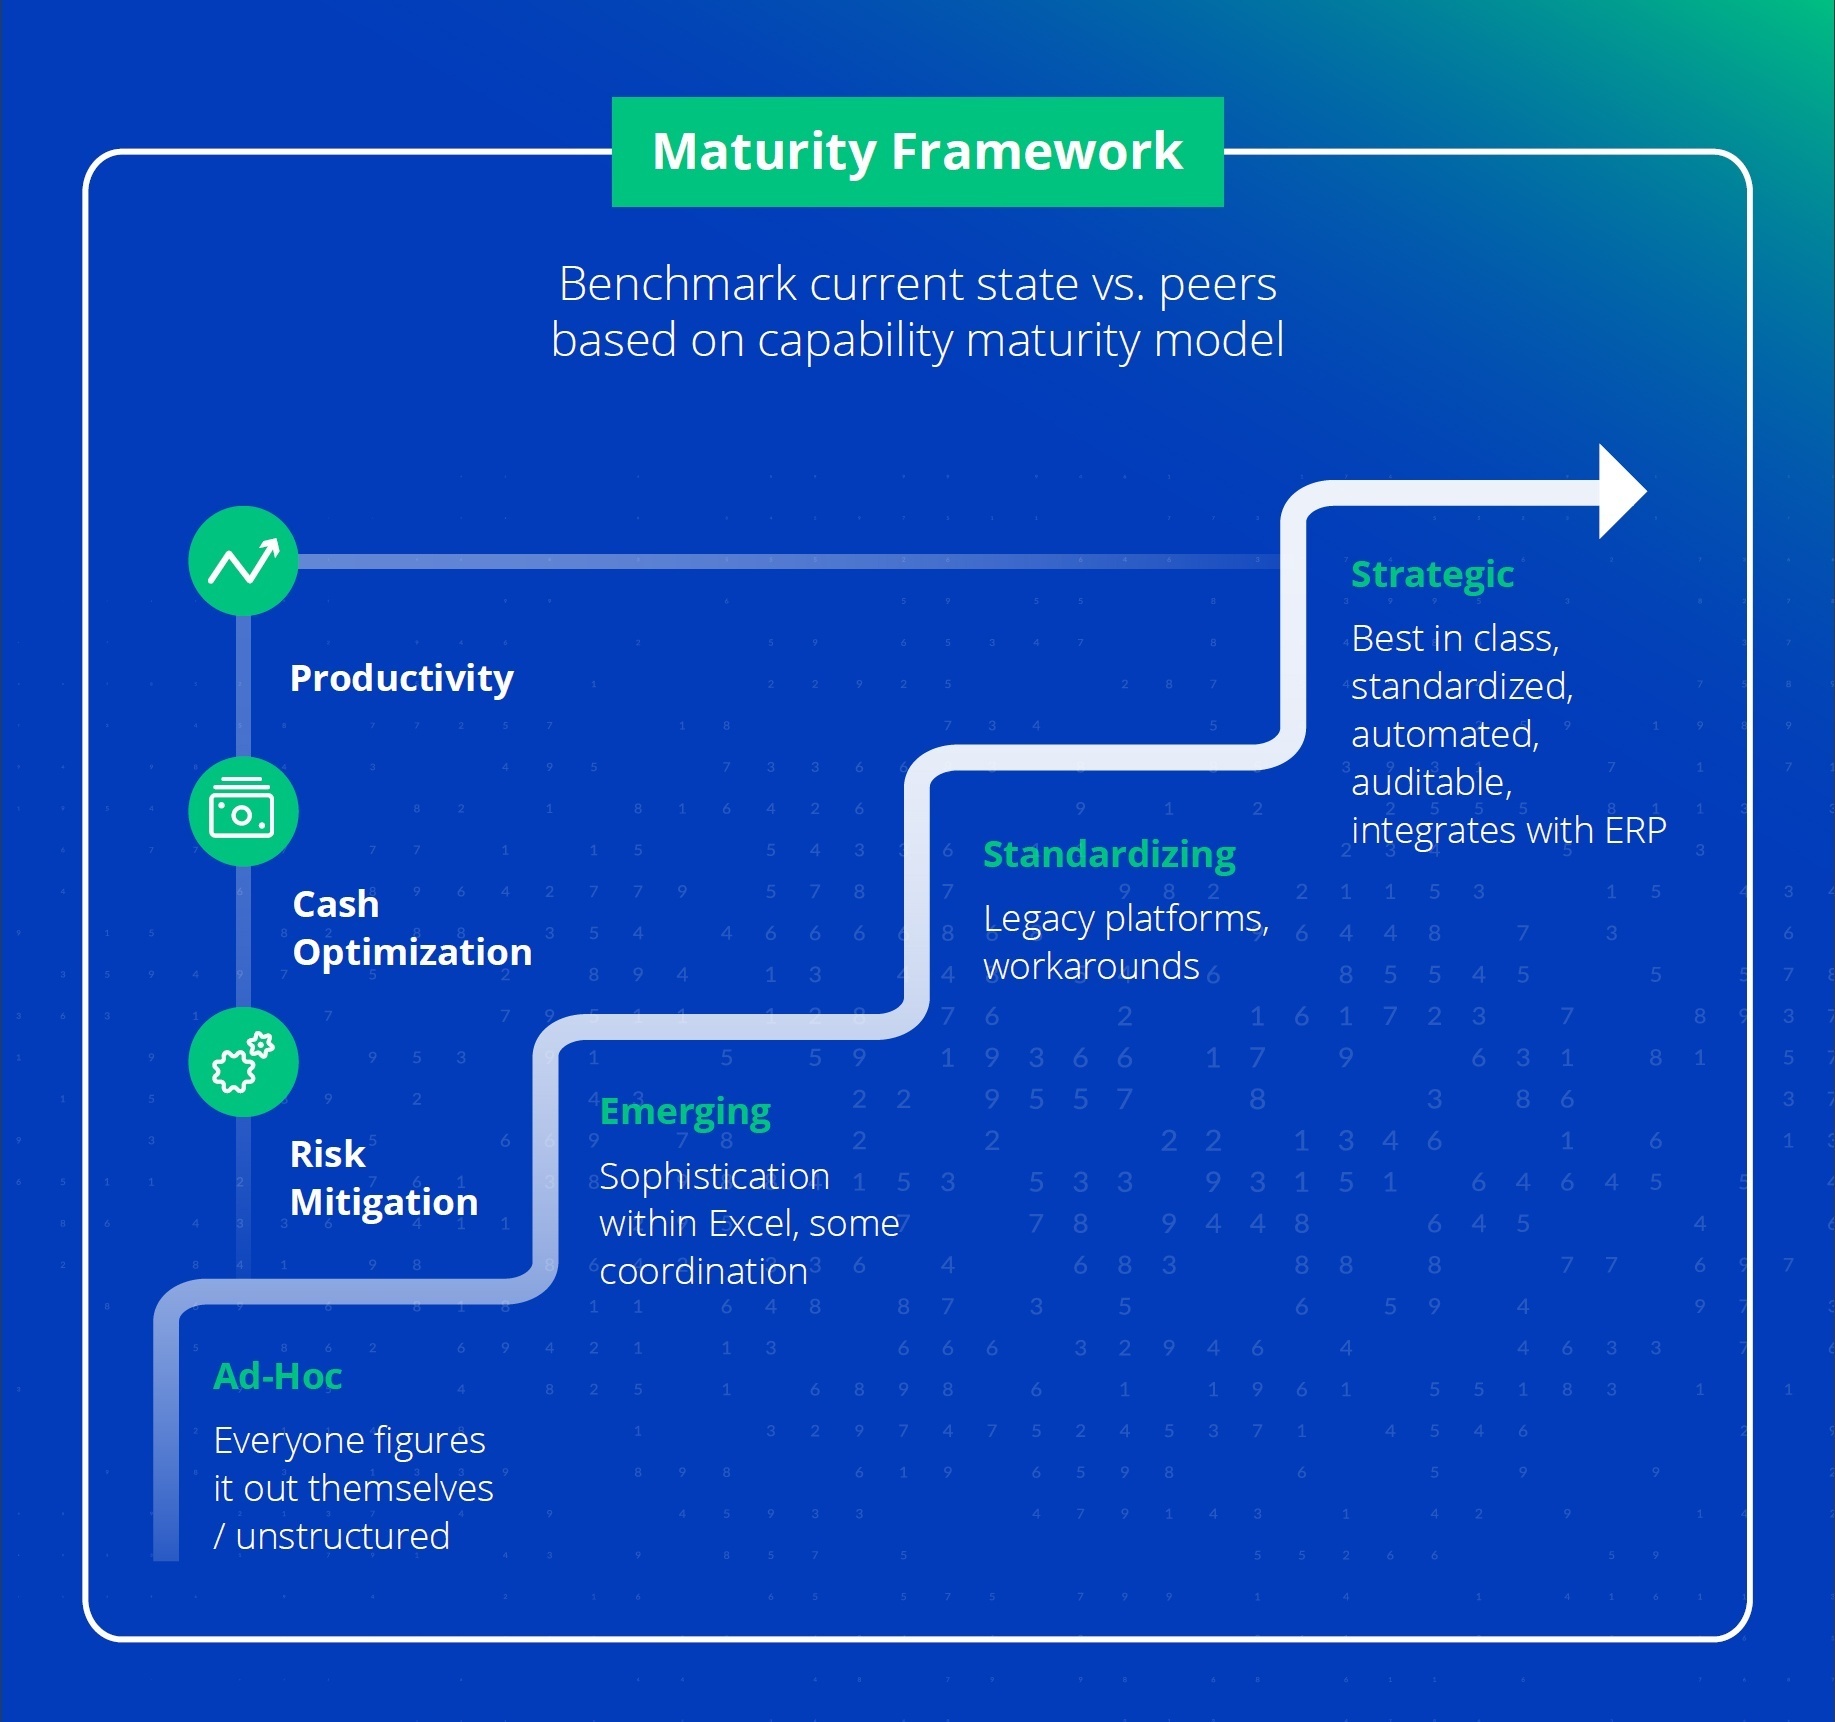 Kyriba Value Engineering's Maturity Framework for Corporate Treasury